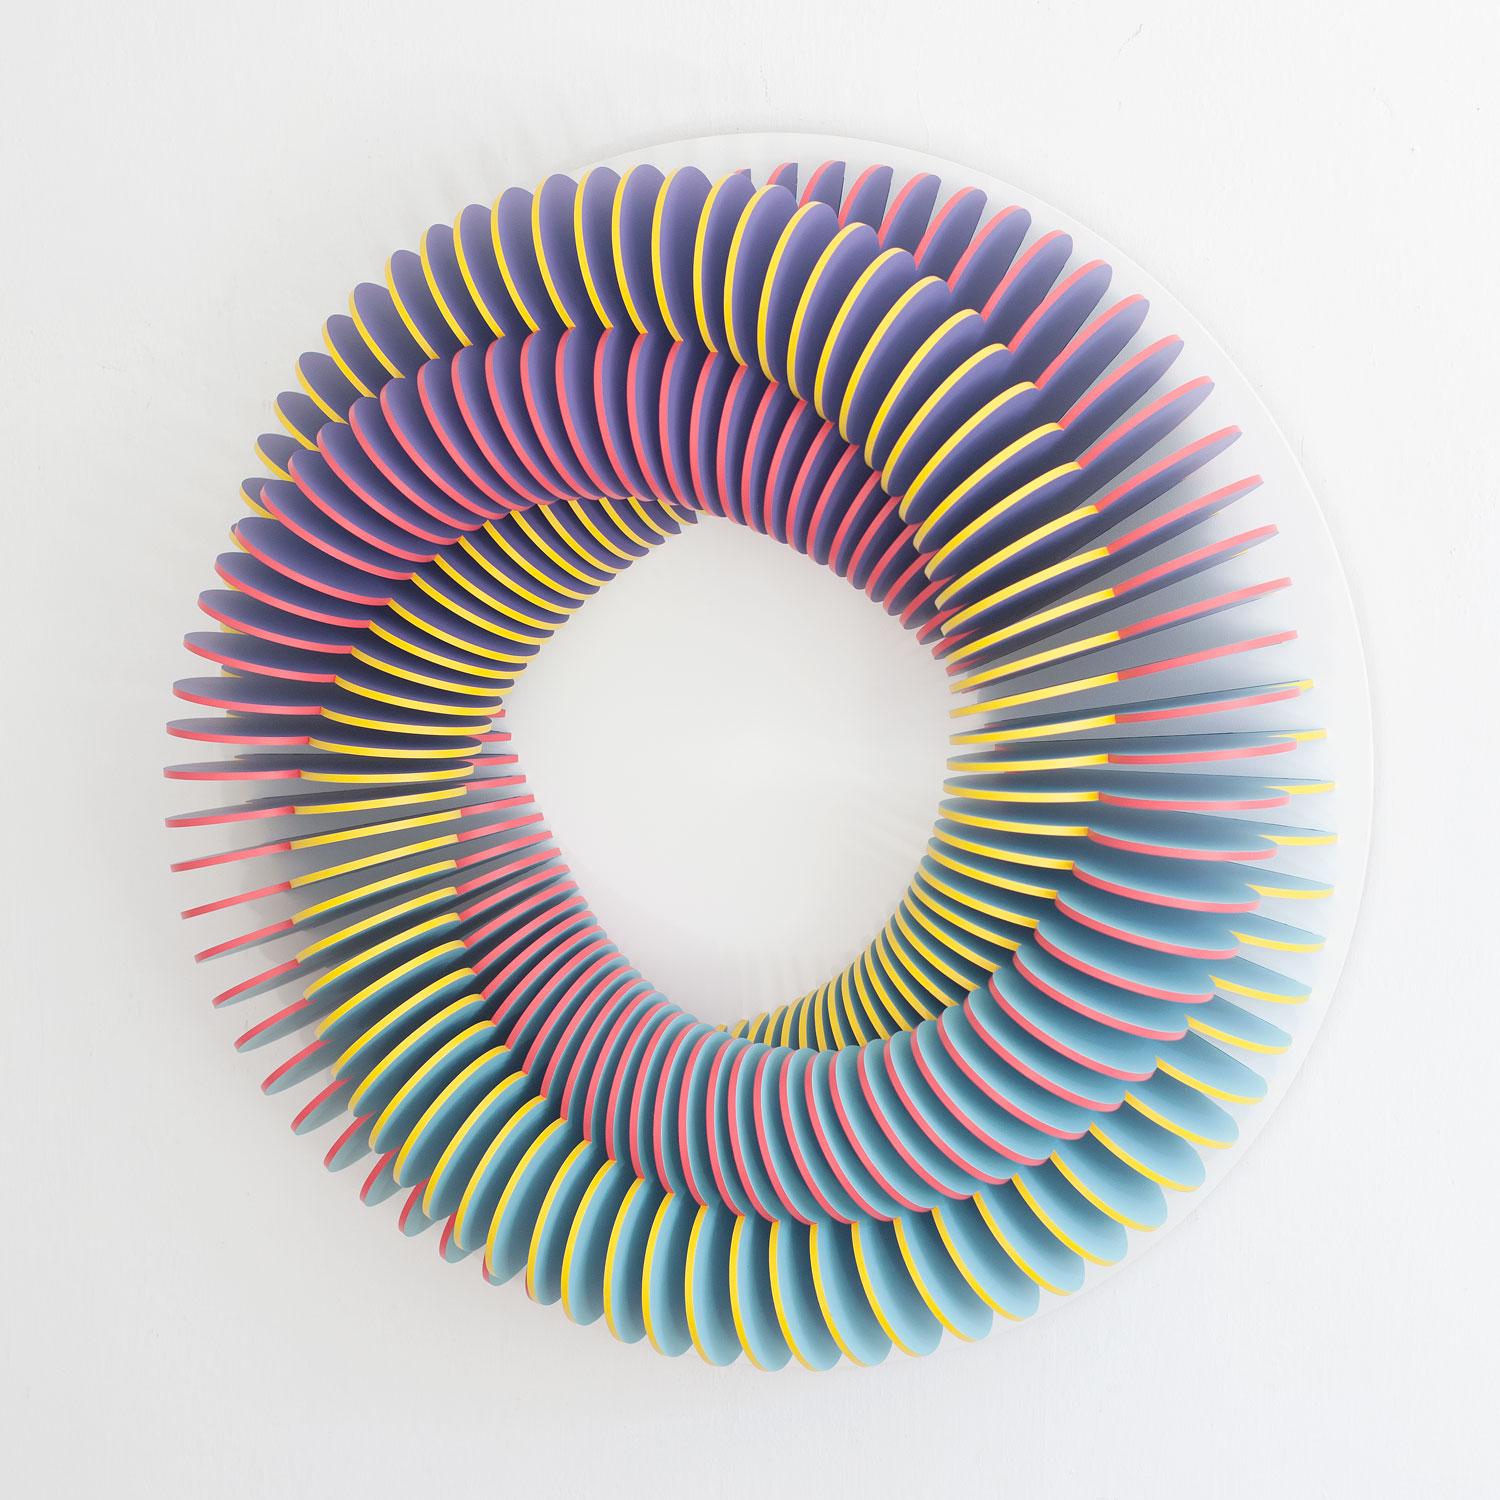 CC 103 - Pink yellow blue abstract geometric 3D wall circular sculpture